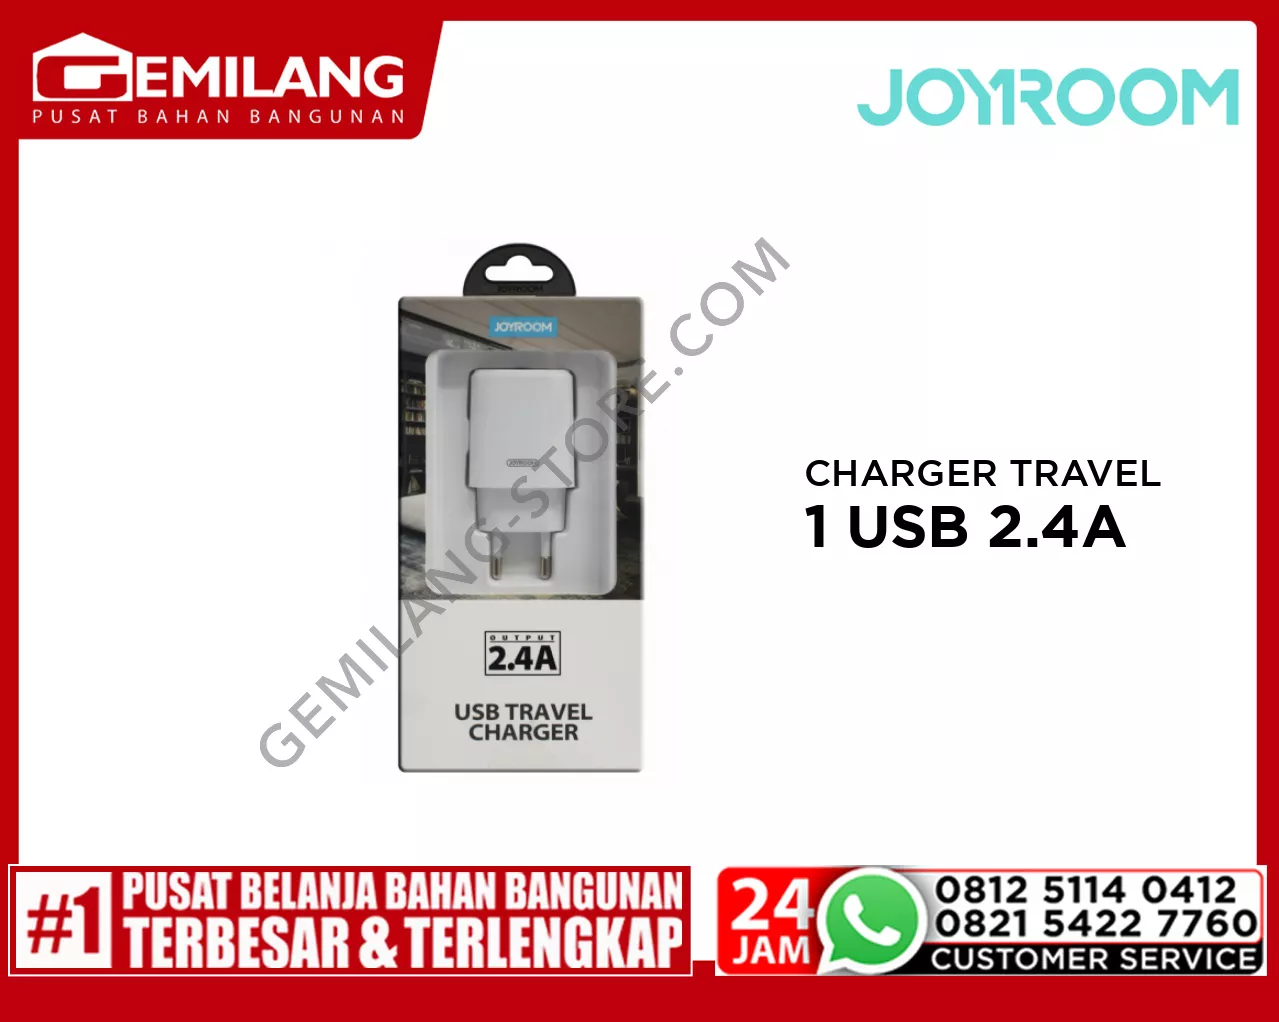 JOYROOM CHARGER TRAVEL 1 USB 2.4A L-M126